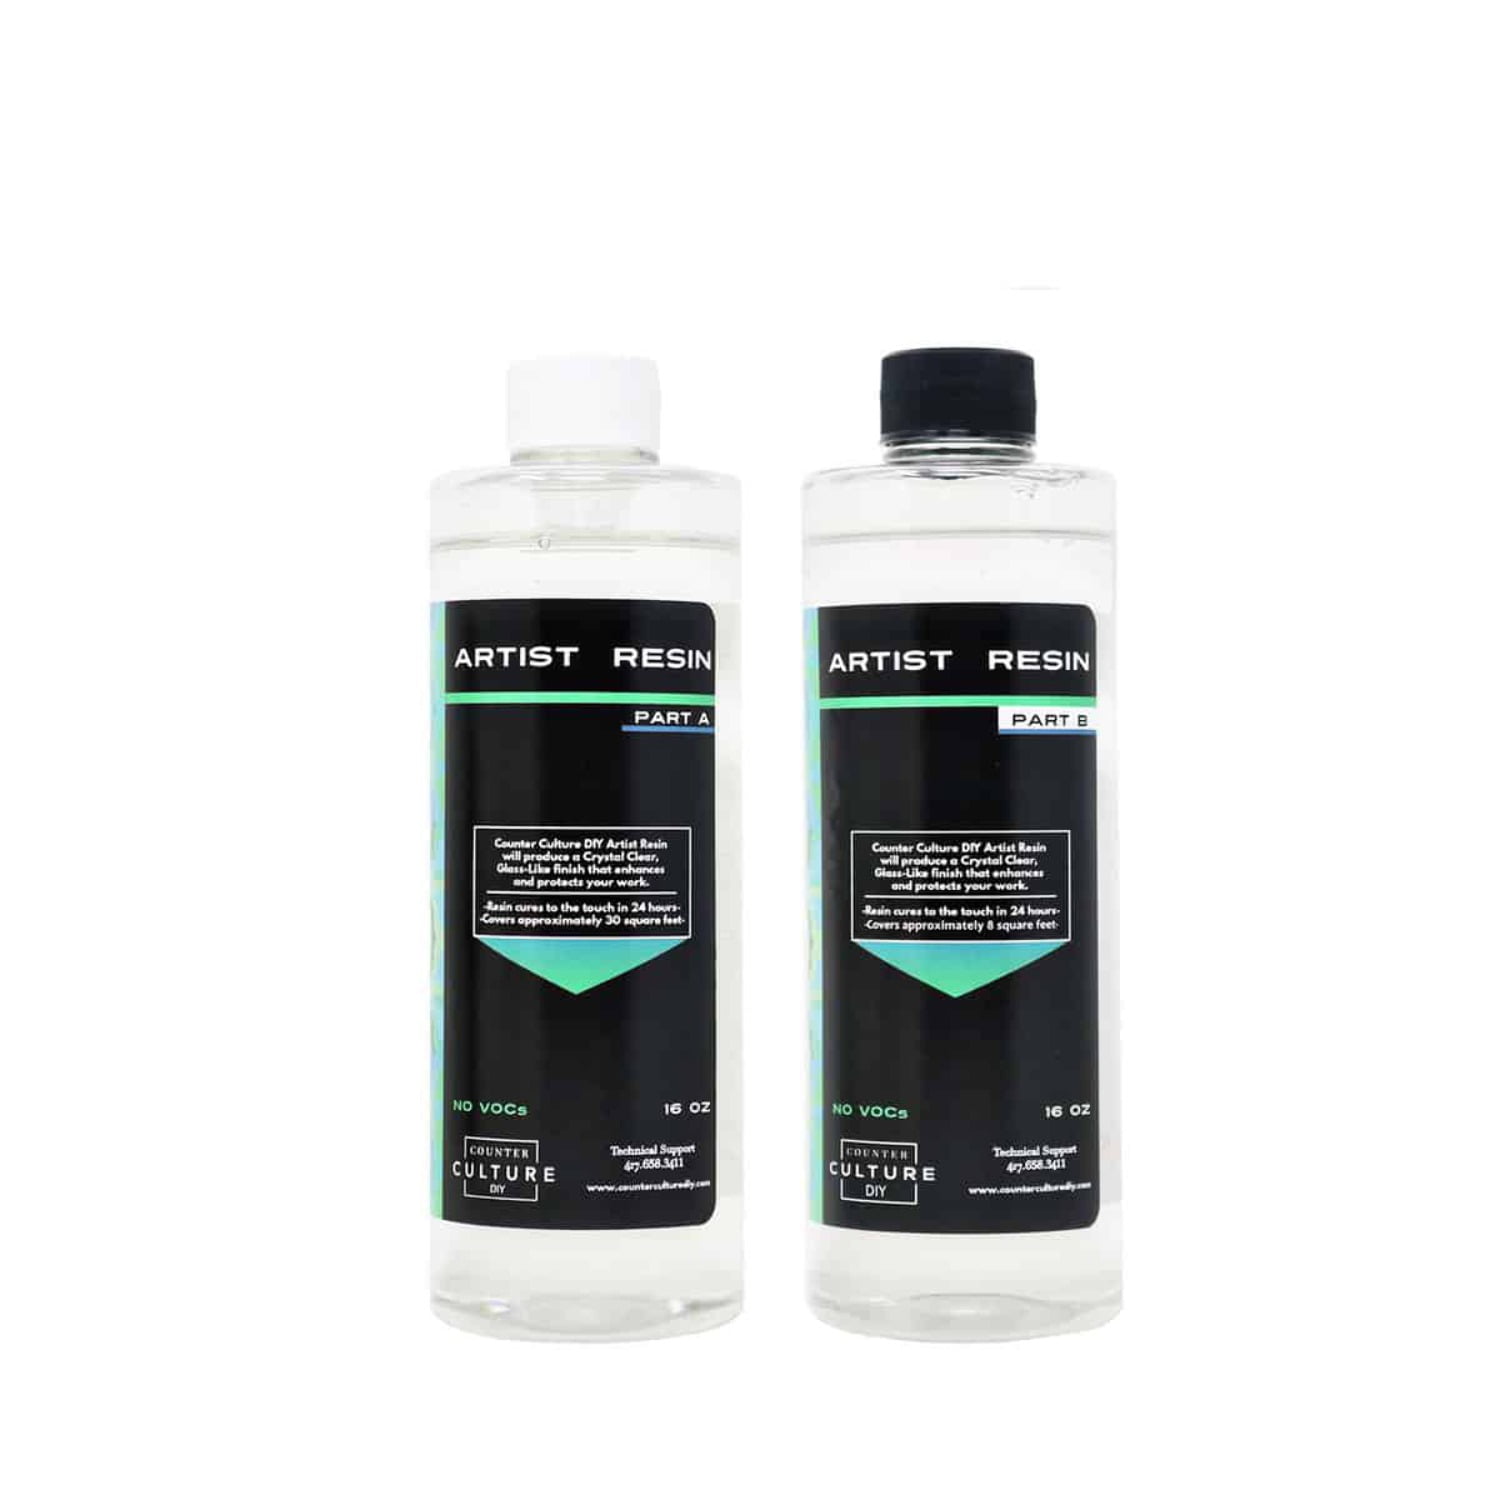 Epoxy Laminating Resin 2:1 Kit UV Stable, High Strength (.75 Gallon Kit-  Medium)